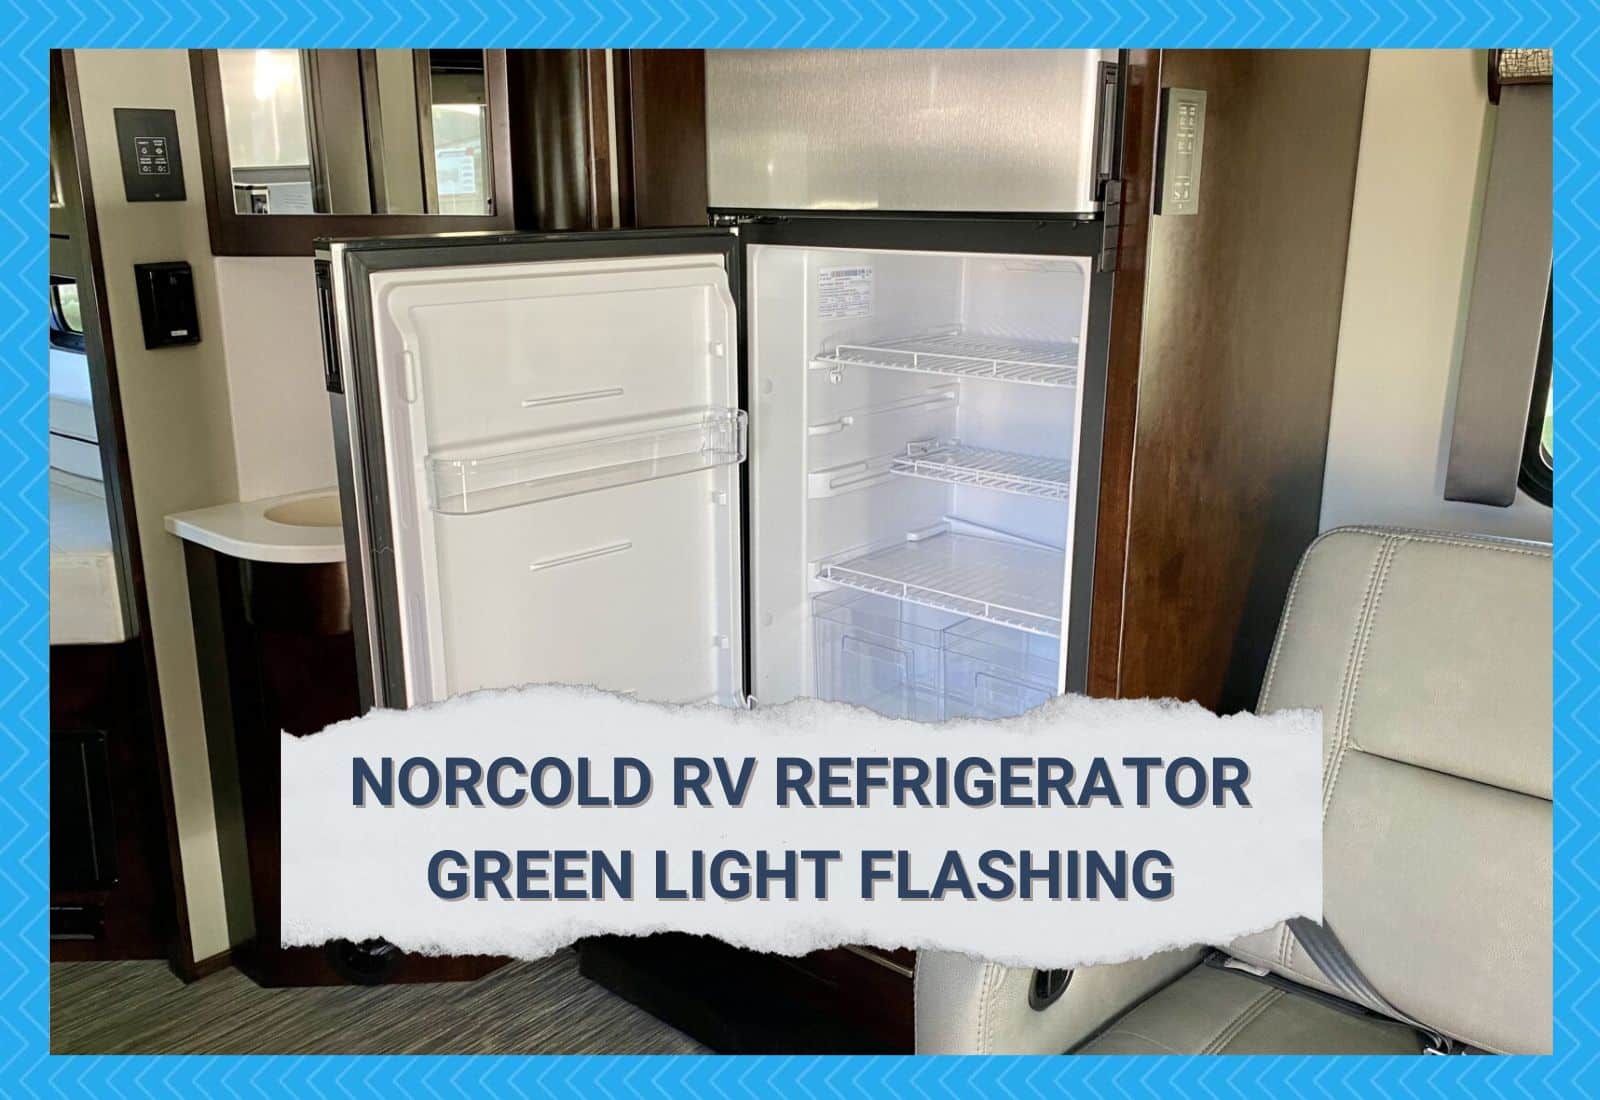 Norcold RV Refrigerator Green Light Flashing